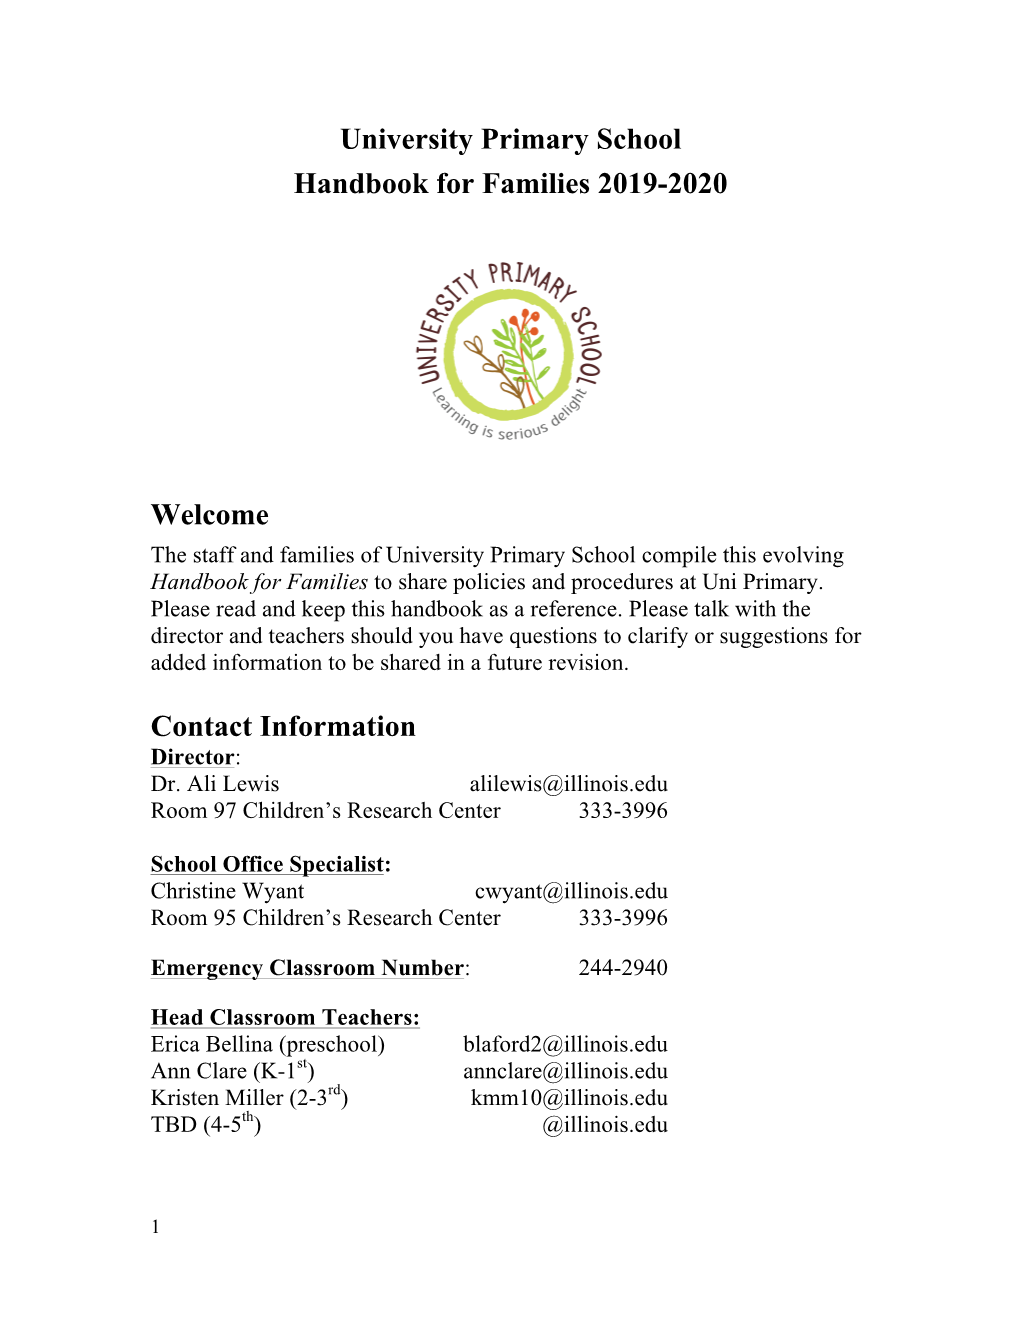 University Primary School Handbook for Families 2019-2020 Welcome